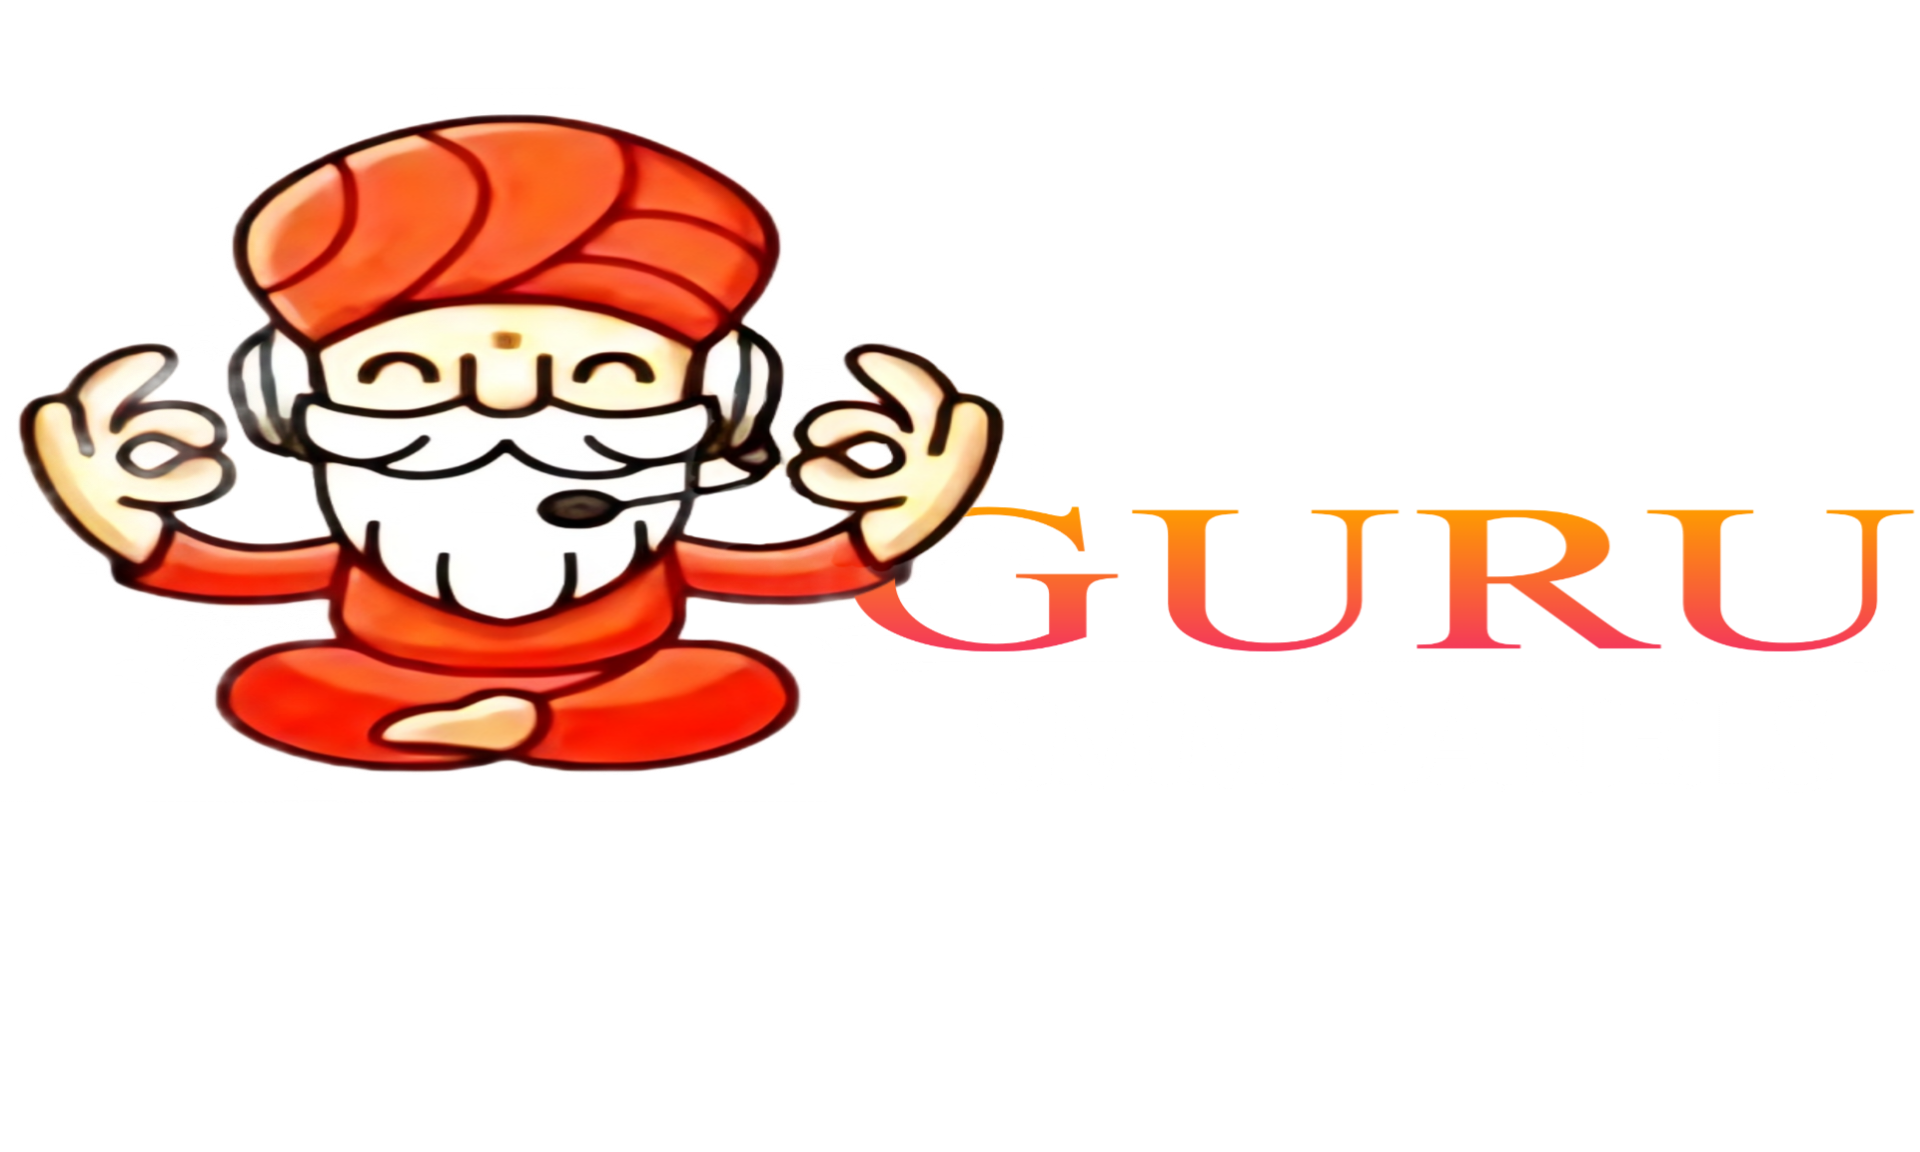 Cheapest SMM Panel in India - Gurusmmpanels.com